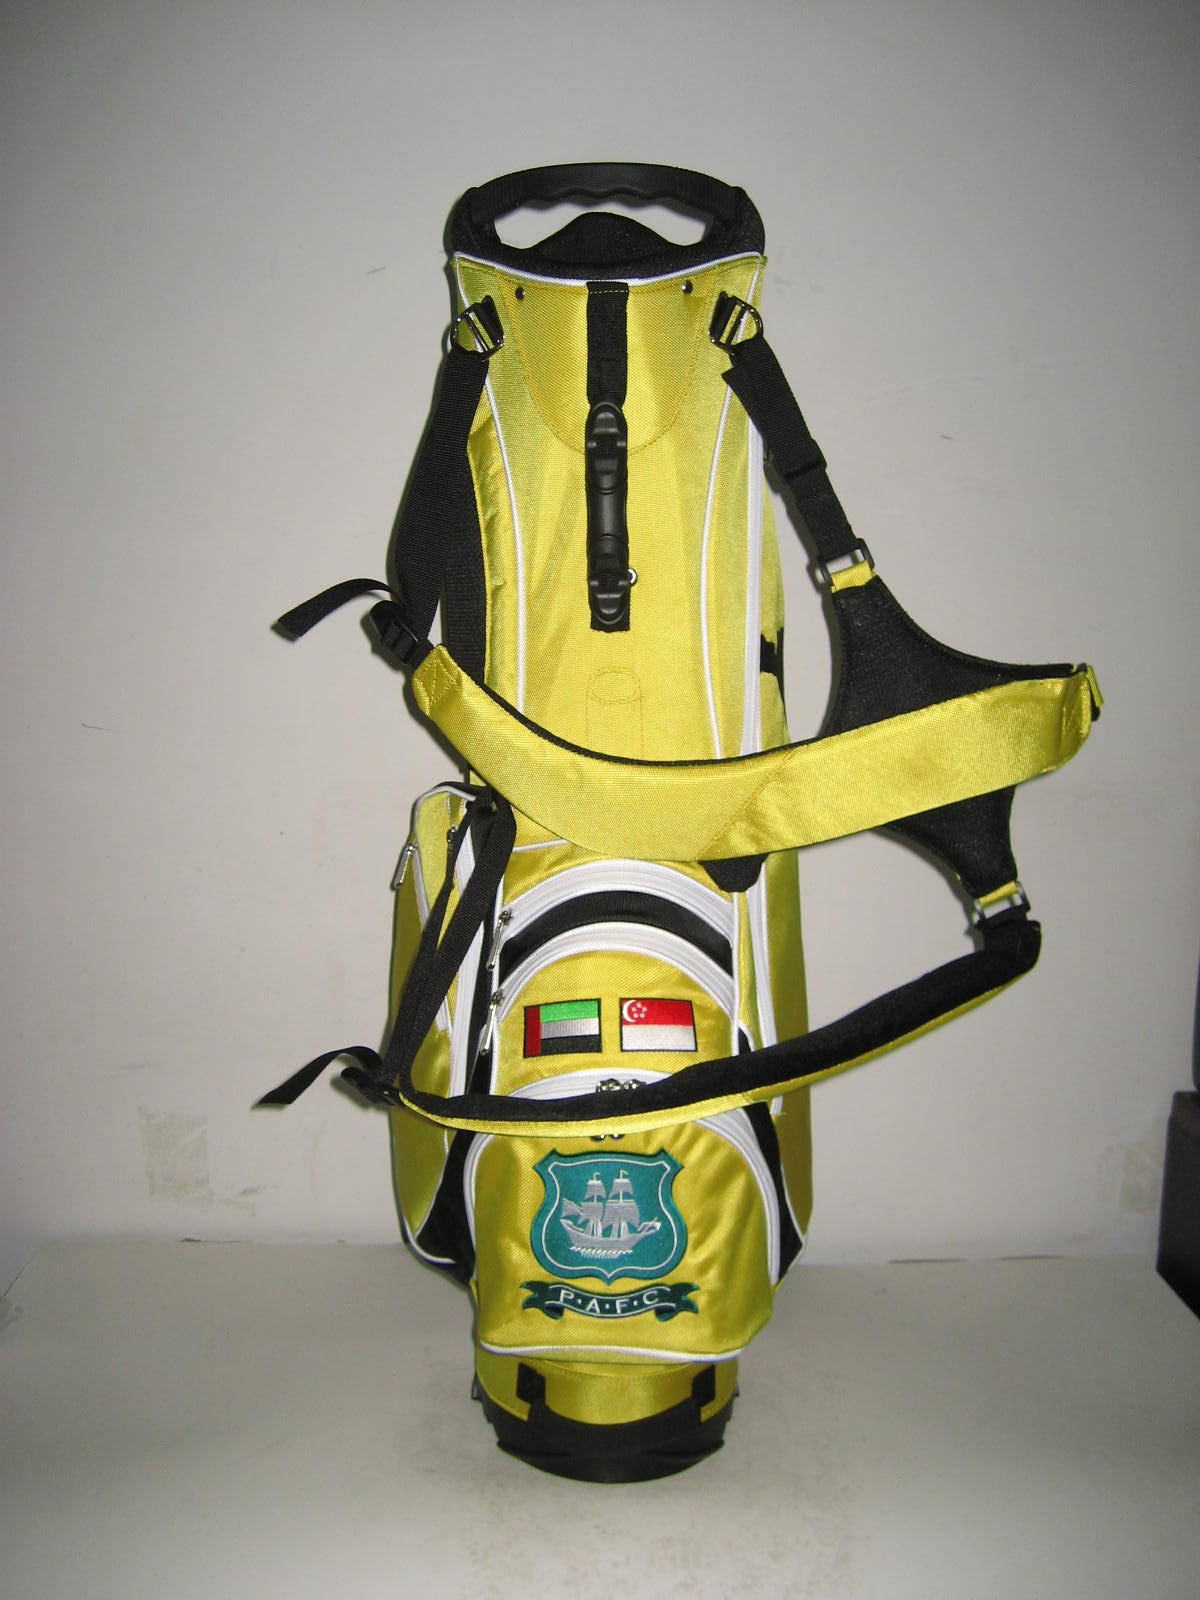 Customised football club golf bags by Golf Custom Bags 22